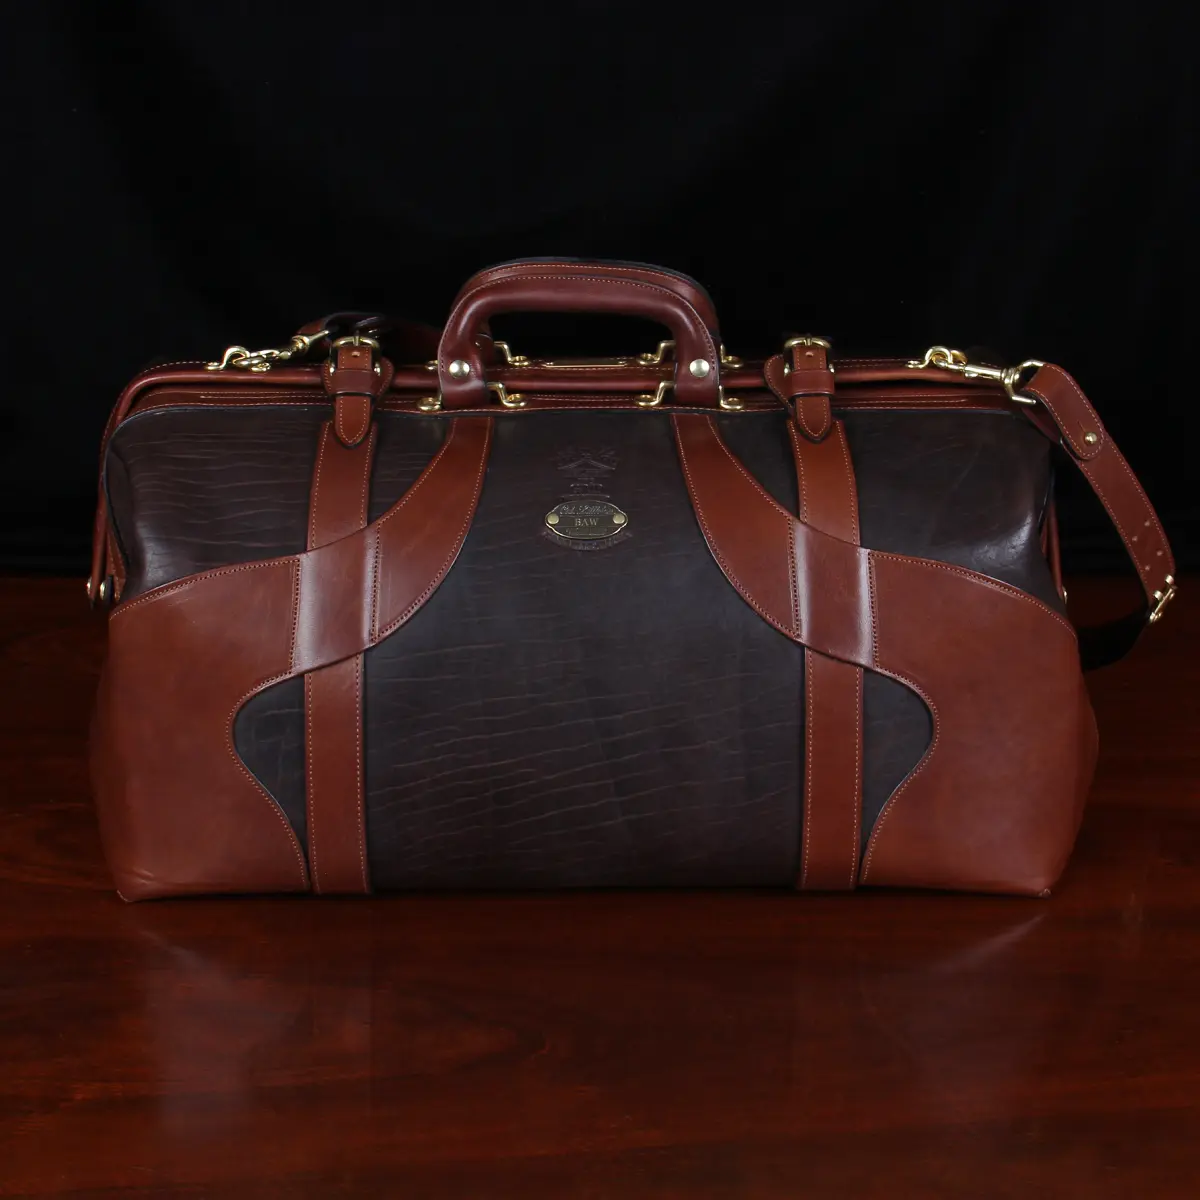 Prune Leather designer women handbag - In Great Condition With Dust Bag